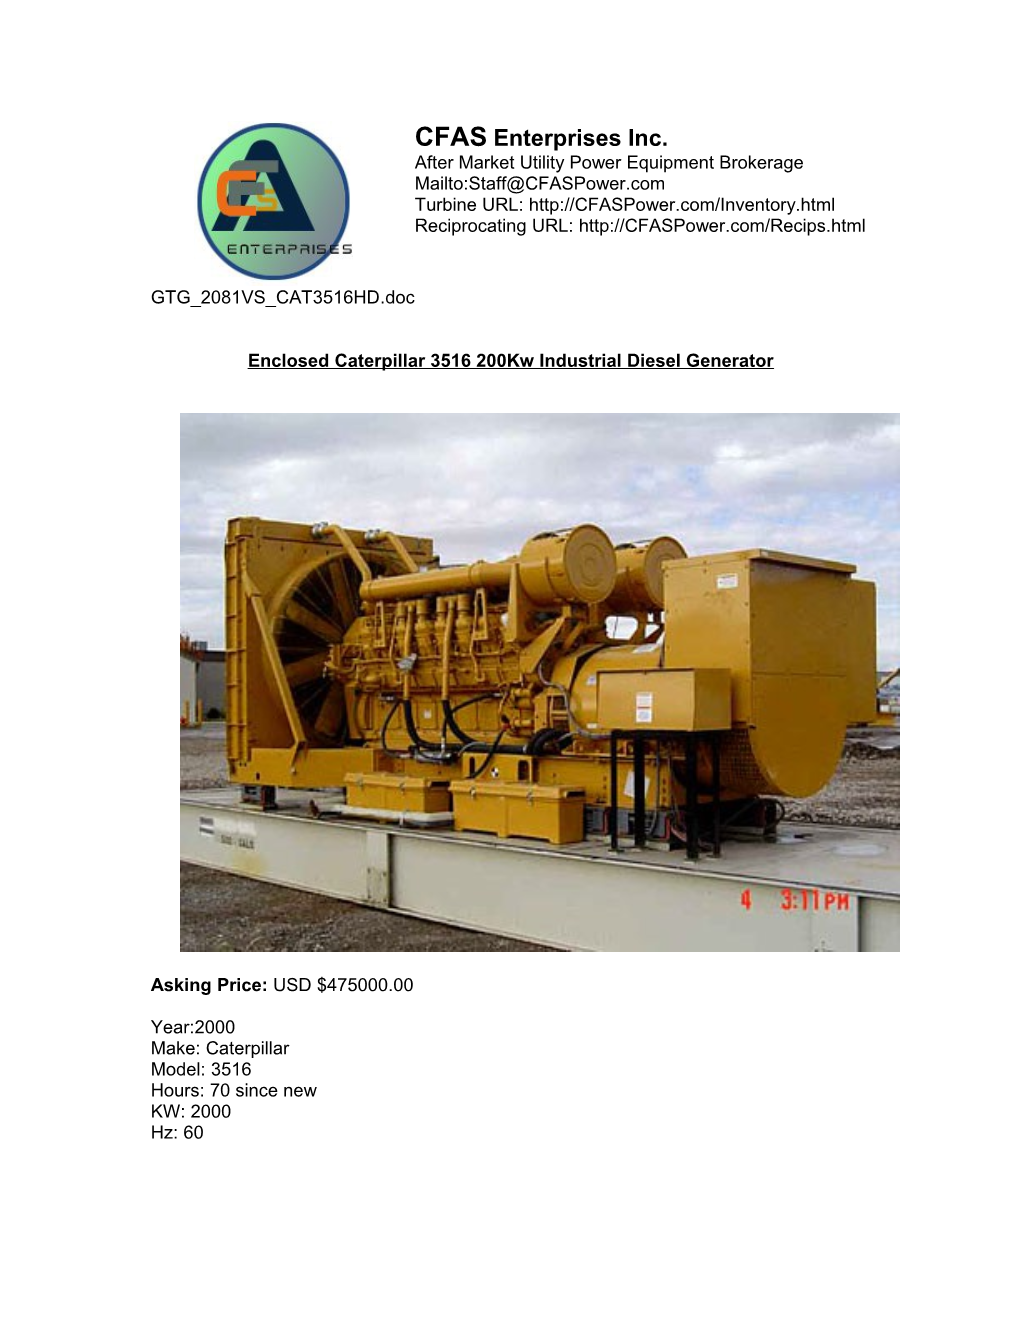 Caterpillar 3516 Industrial Diesel Generator